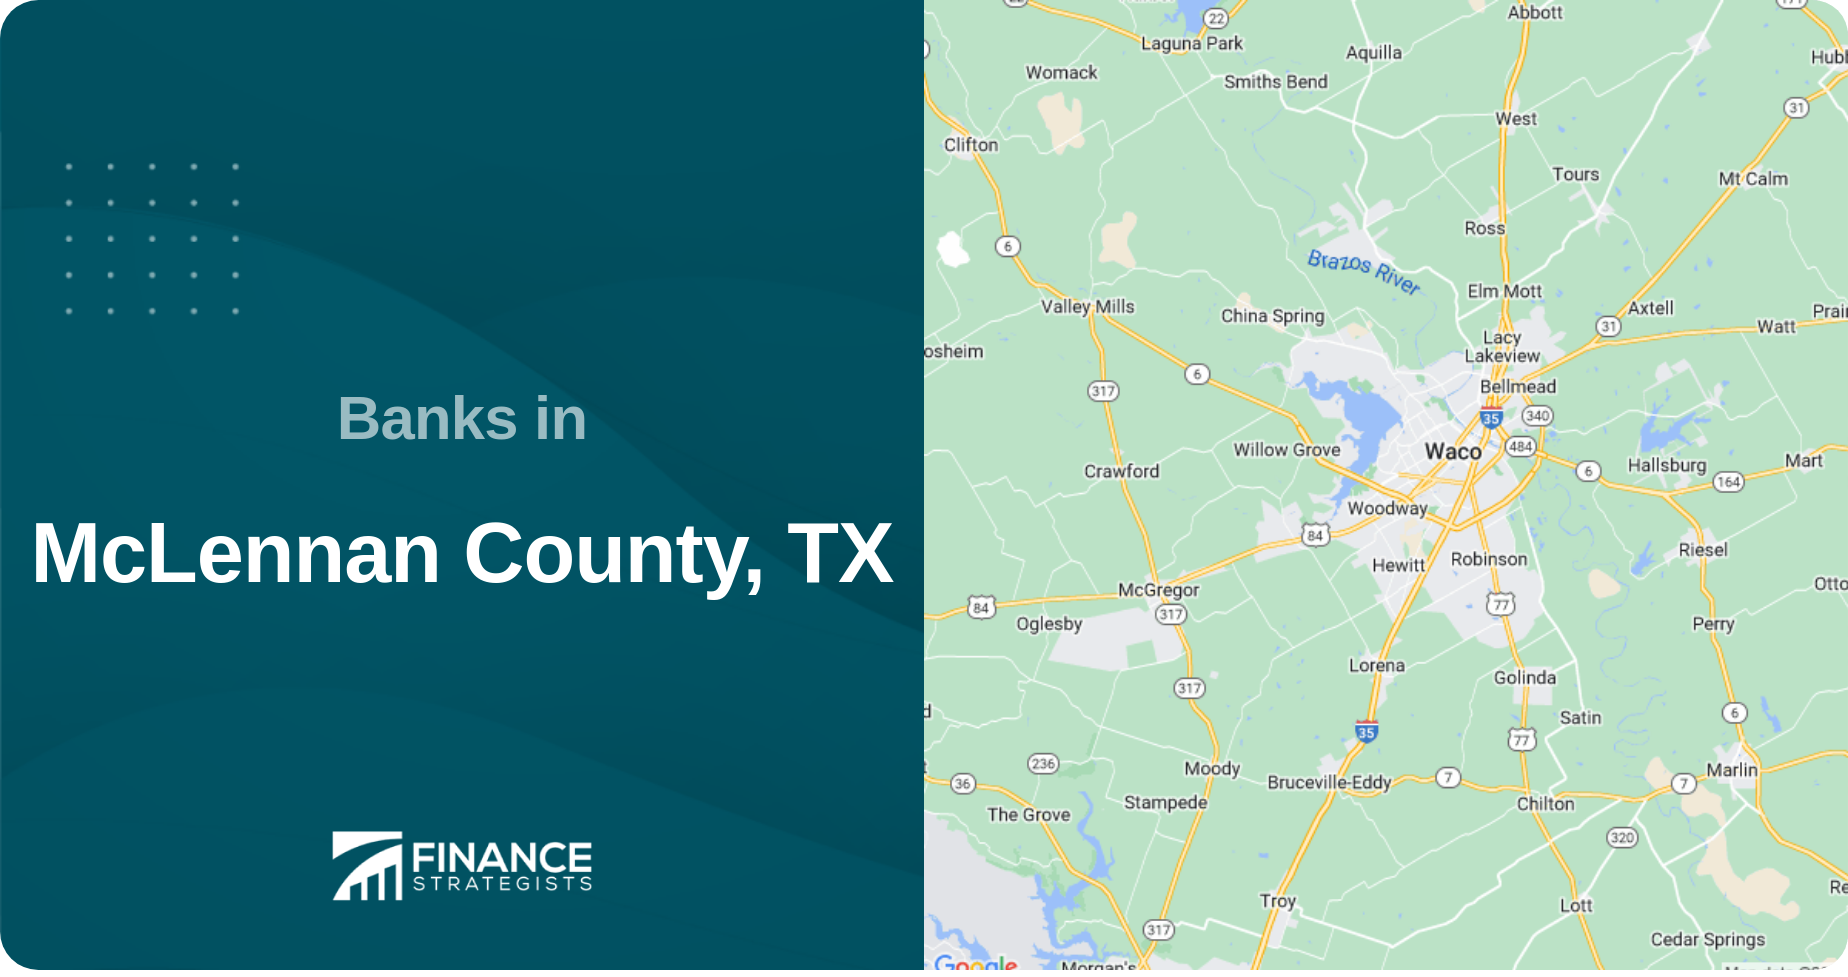 Banks in McLennan County, TX